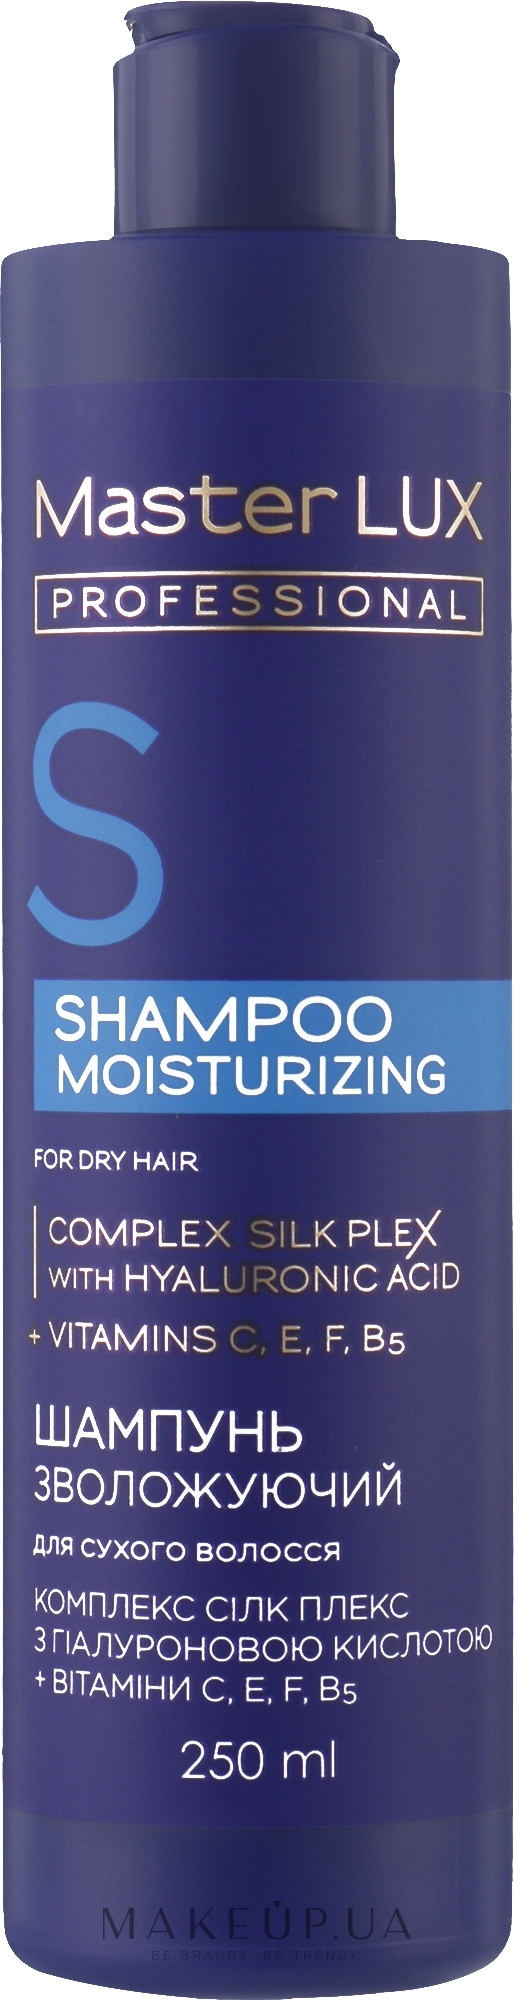 Шампунь для сухих волос "Увлажняющий" - Master LUX Professional Moisturizing Shampoo — фото 250ml